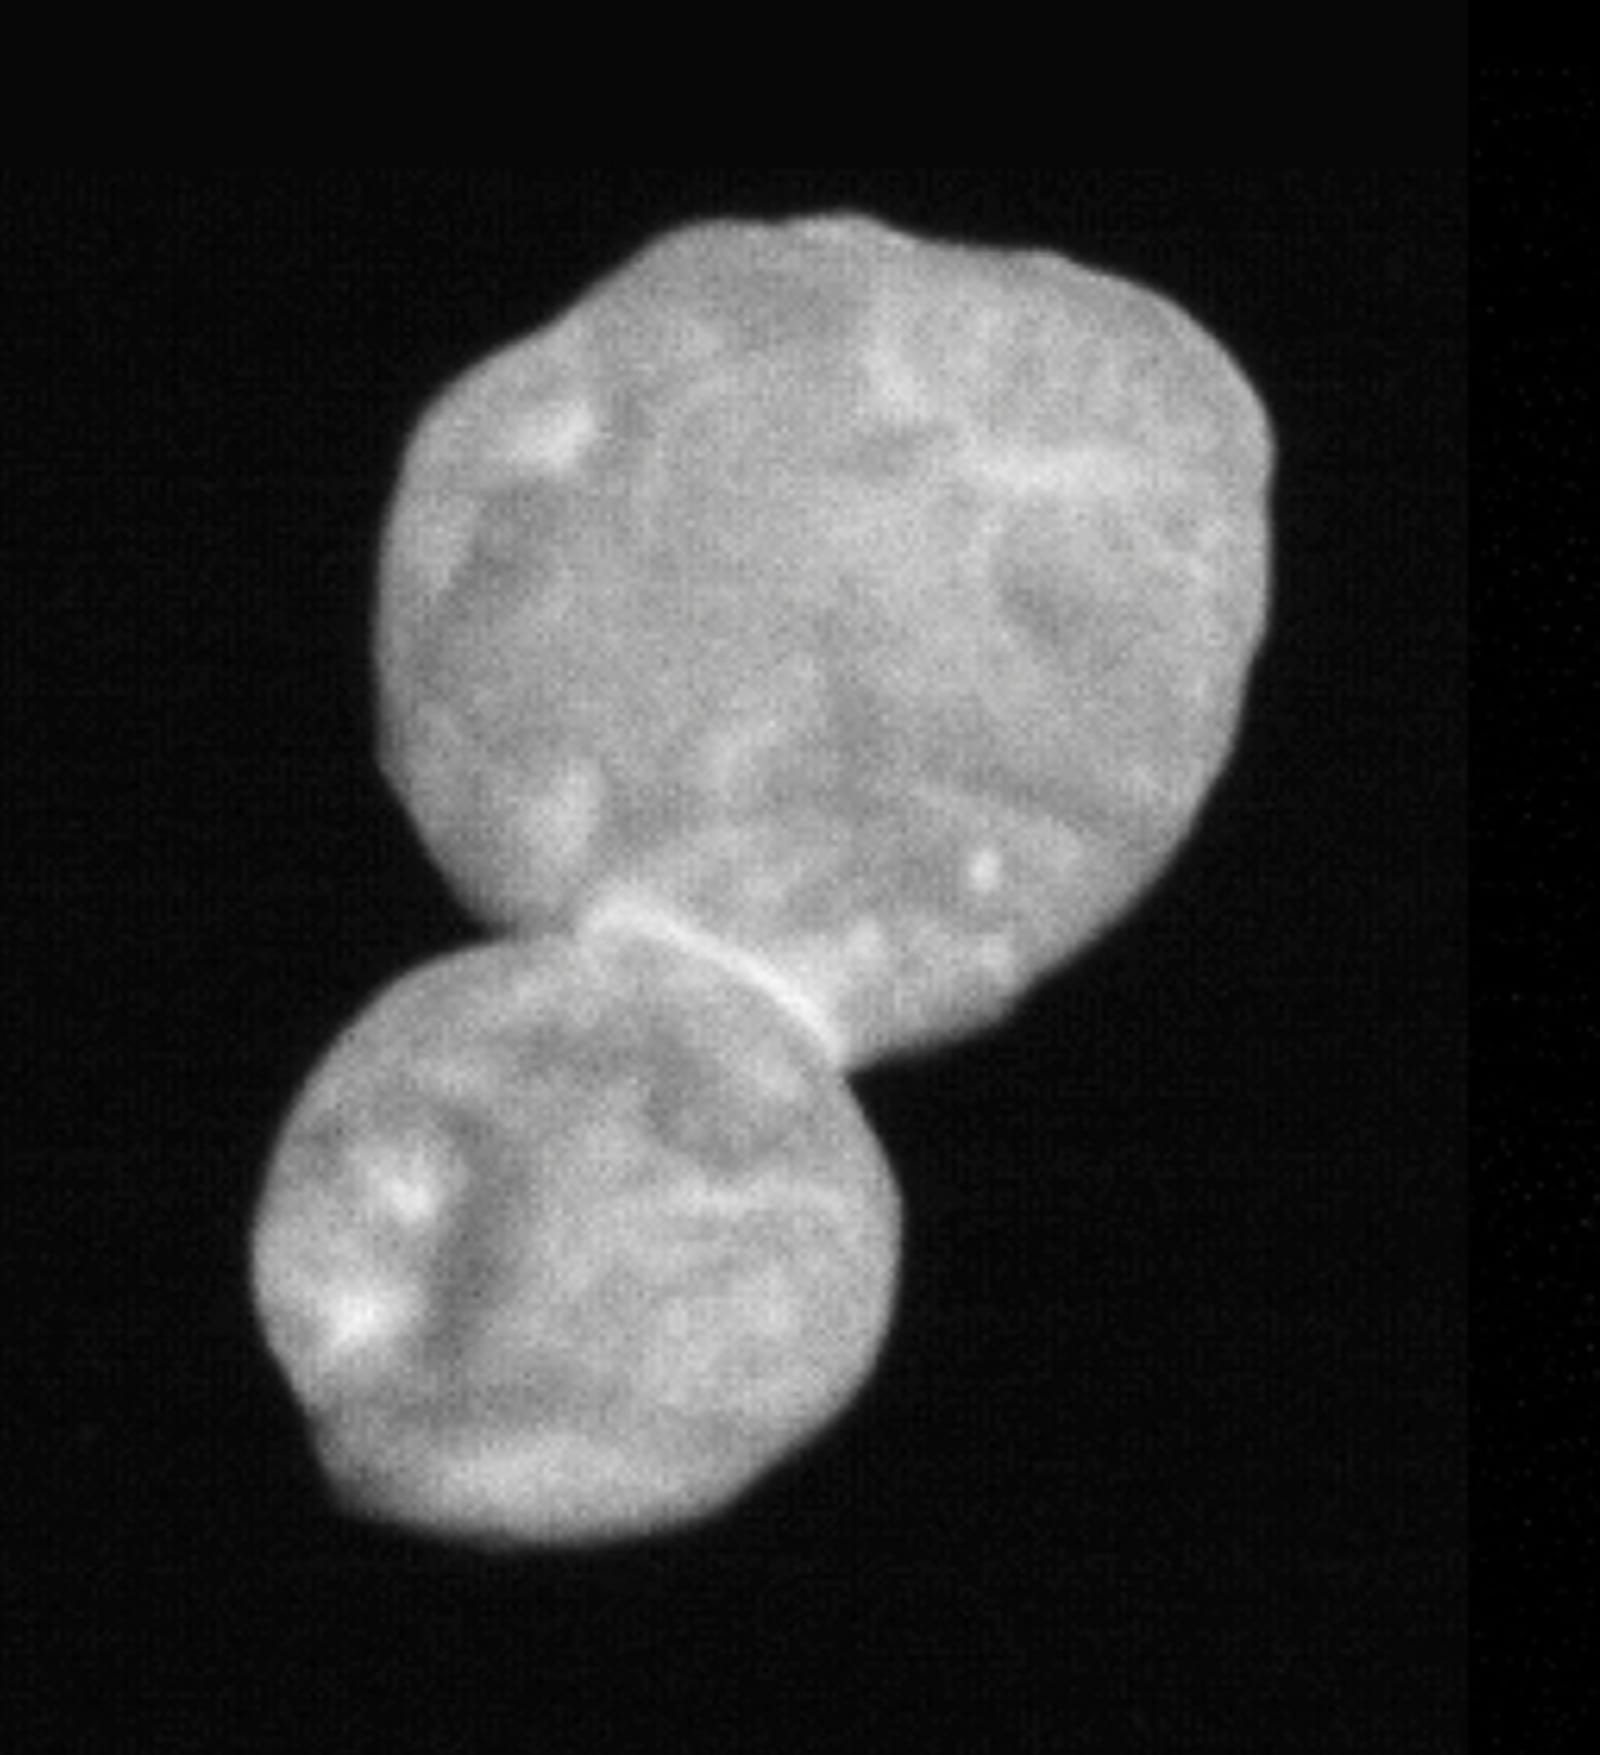 Close-up of 2014 MU69 from New Horizons probe